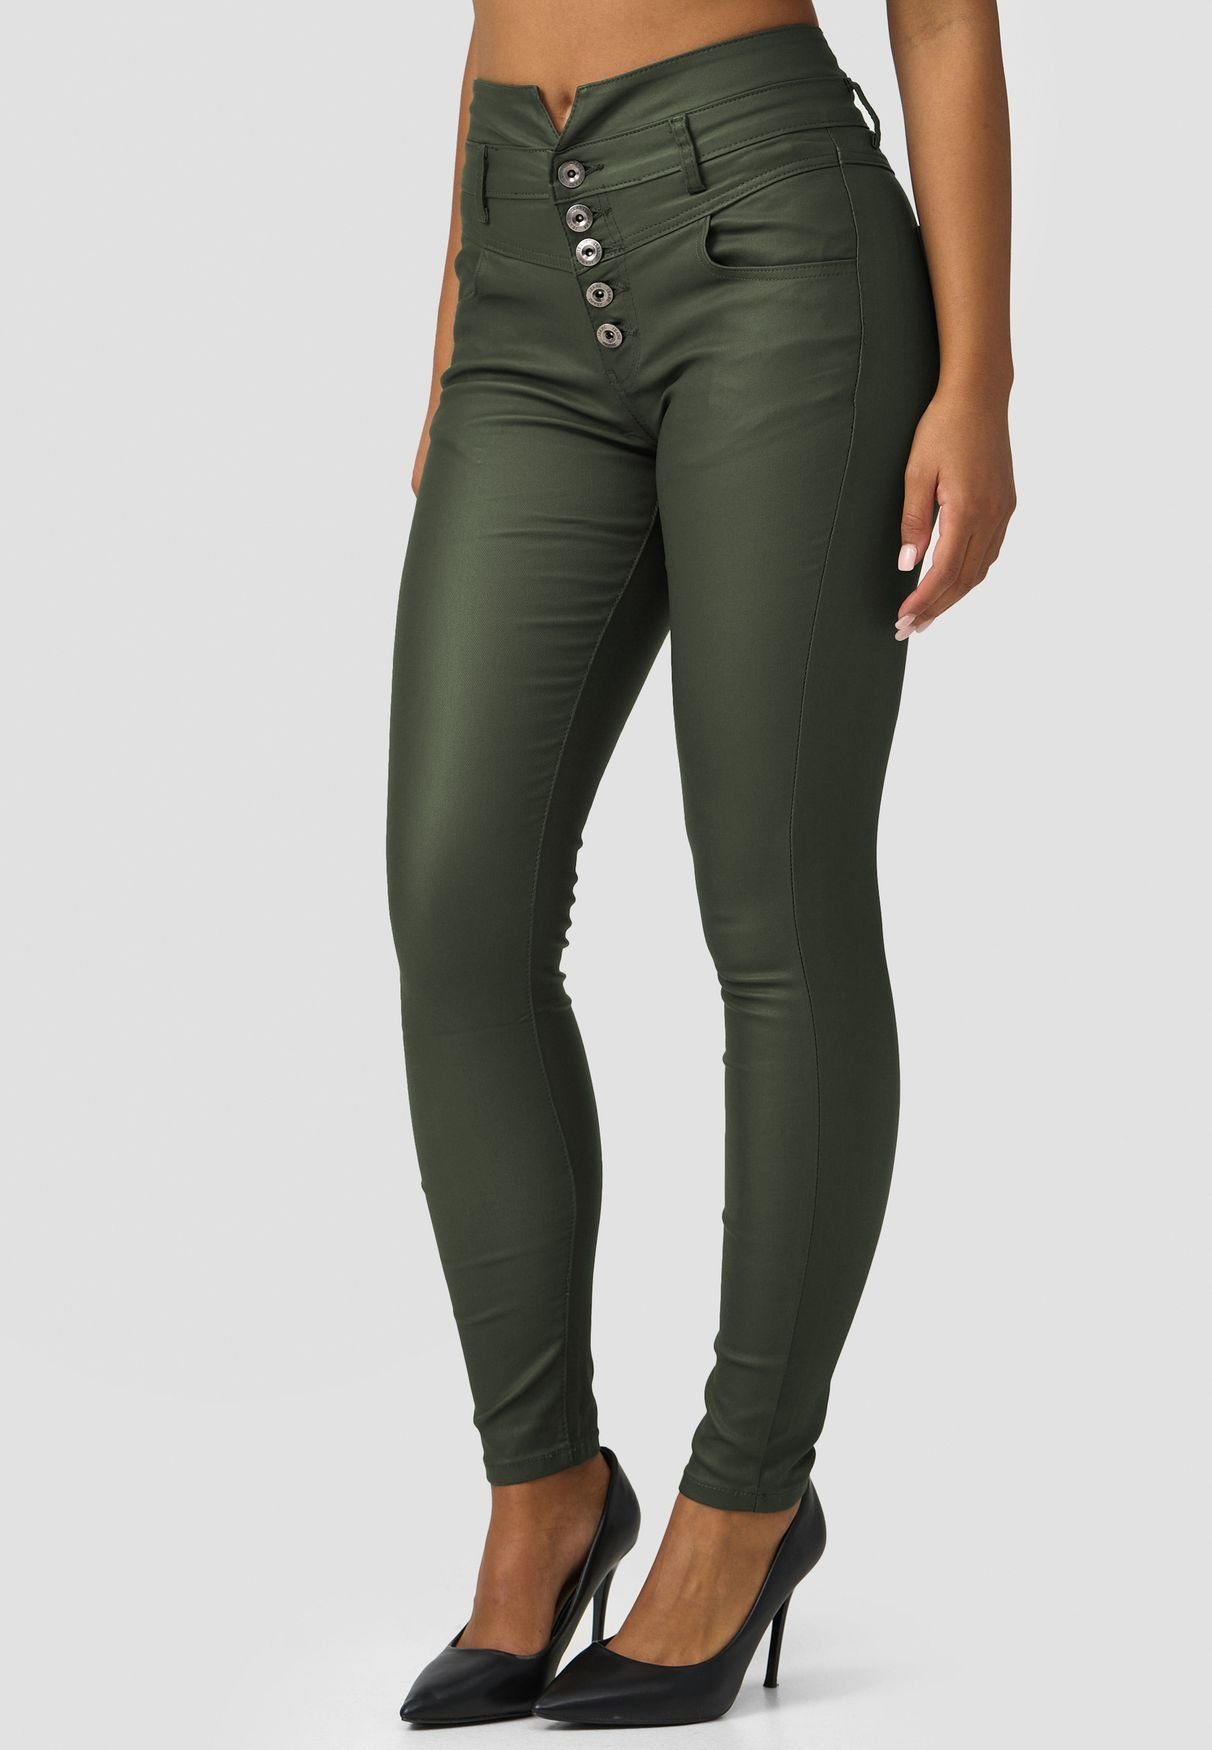 HELLO MISS Lederimitathose »3868« (skinny fit, 1-tlg., Knopf) Damen Leder  Optik Stretch Hose Beschichtet Coated Denim Pants Jeans online kaufen | OTTO